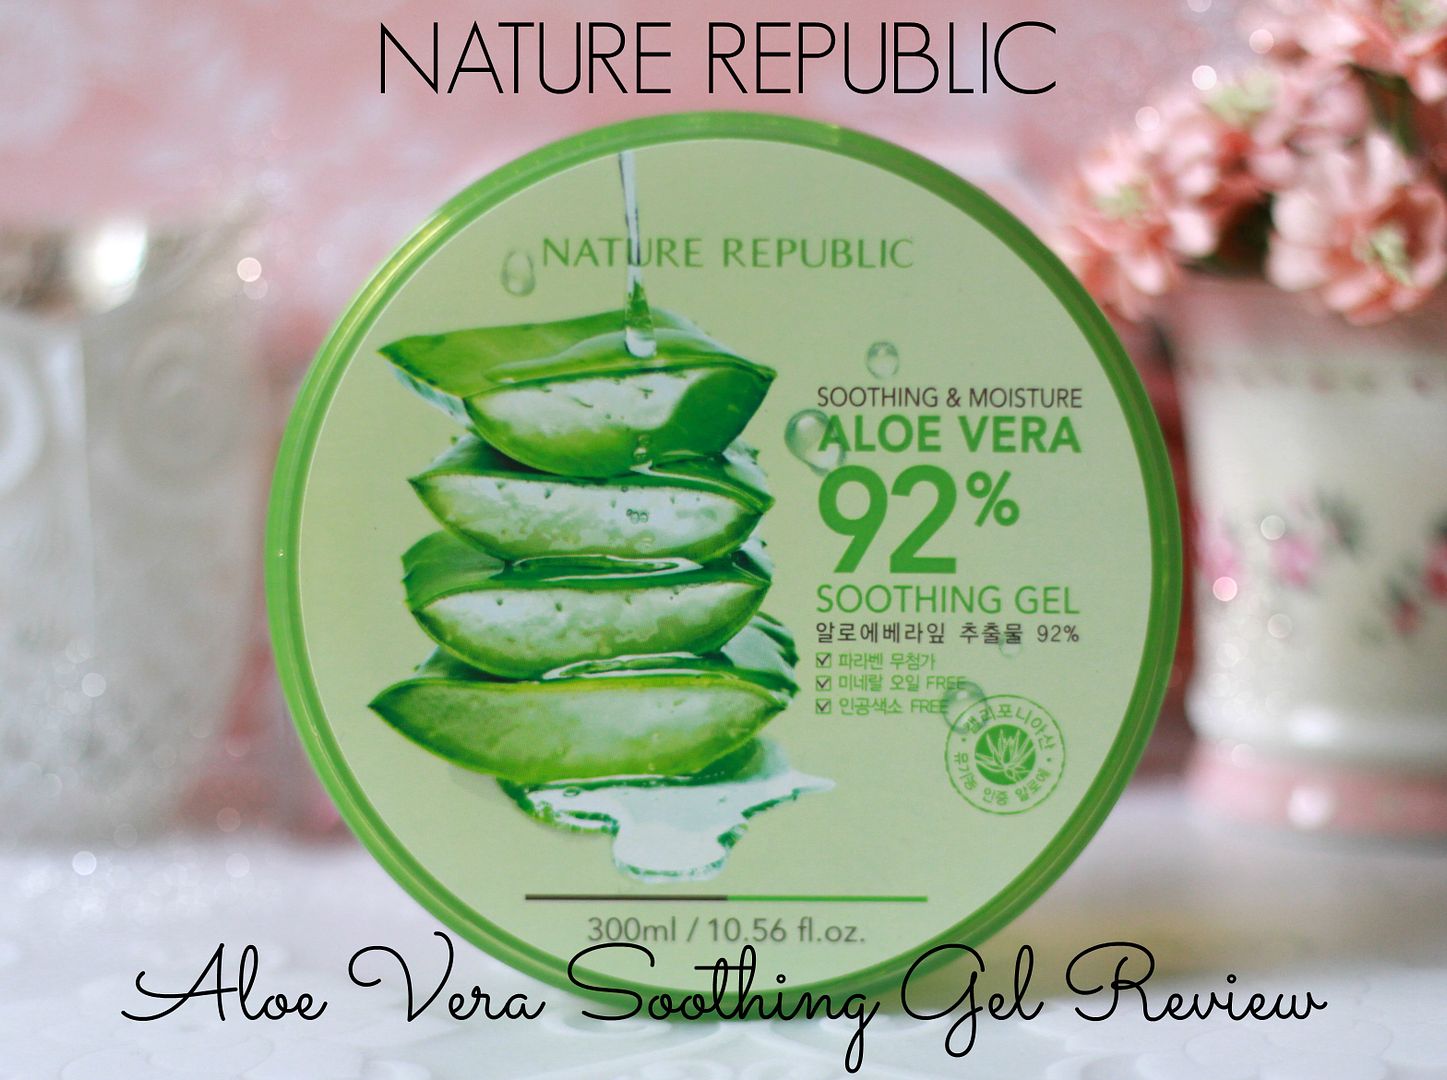 Aloe Vera body Gel nature Republic. Organia Aloe Vera Soothing Gel 92%. Алоэ шайба nature Republic. Nature Republic баннер.